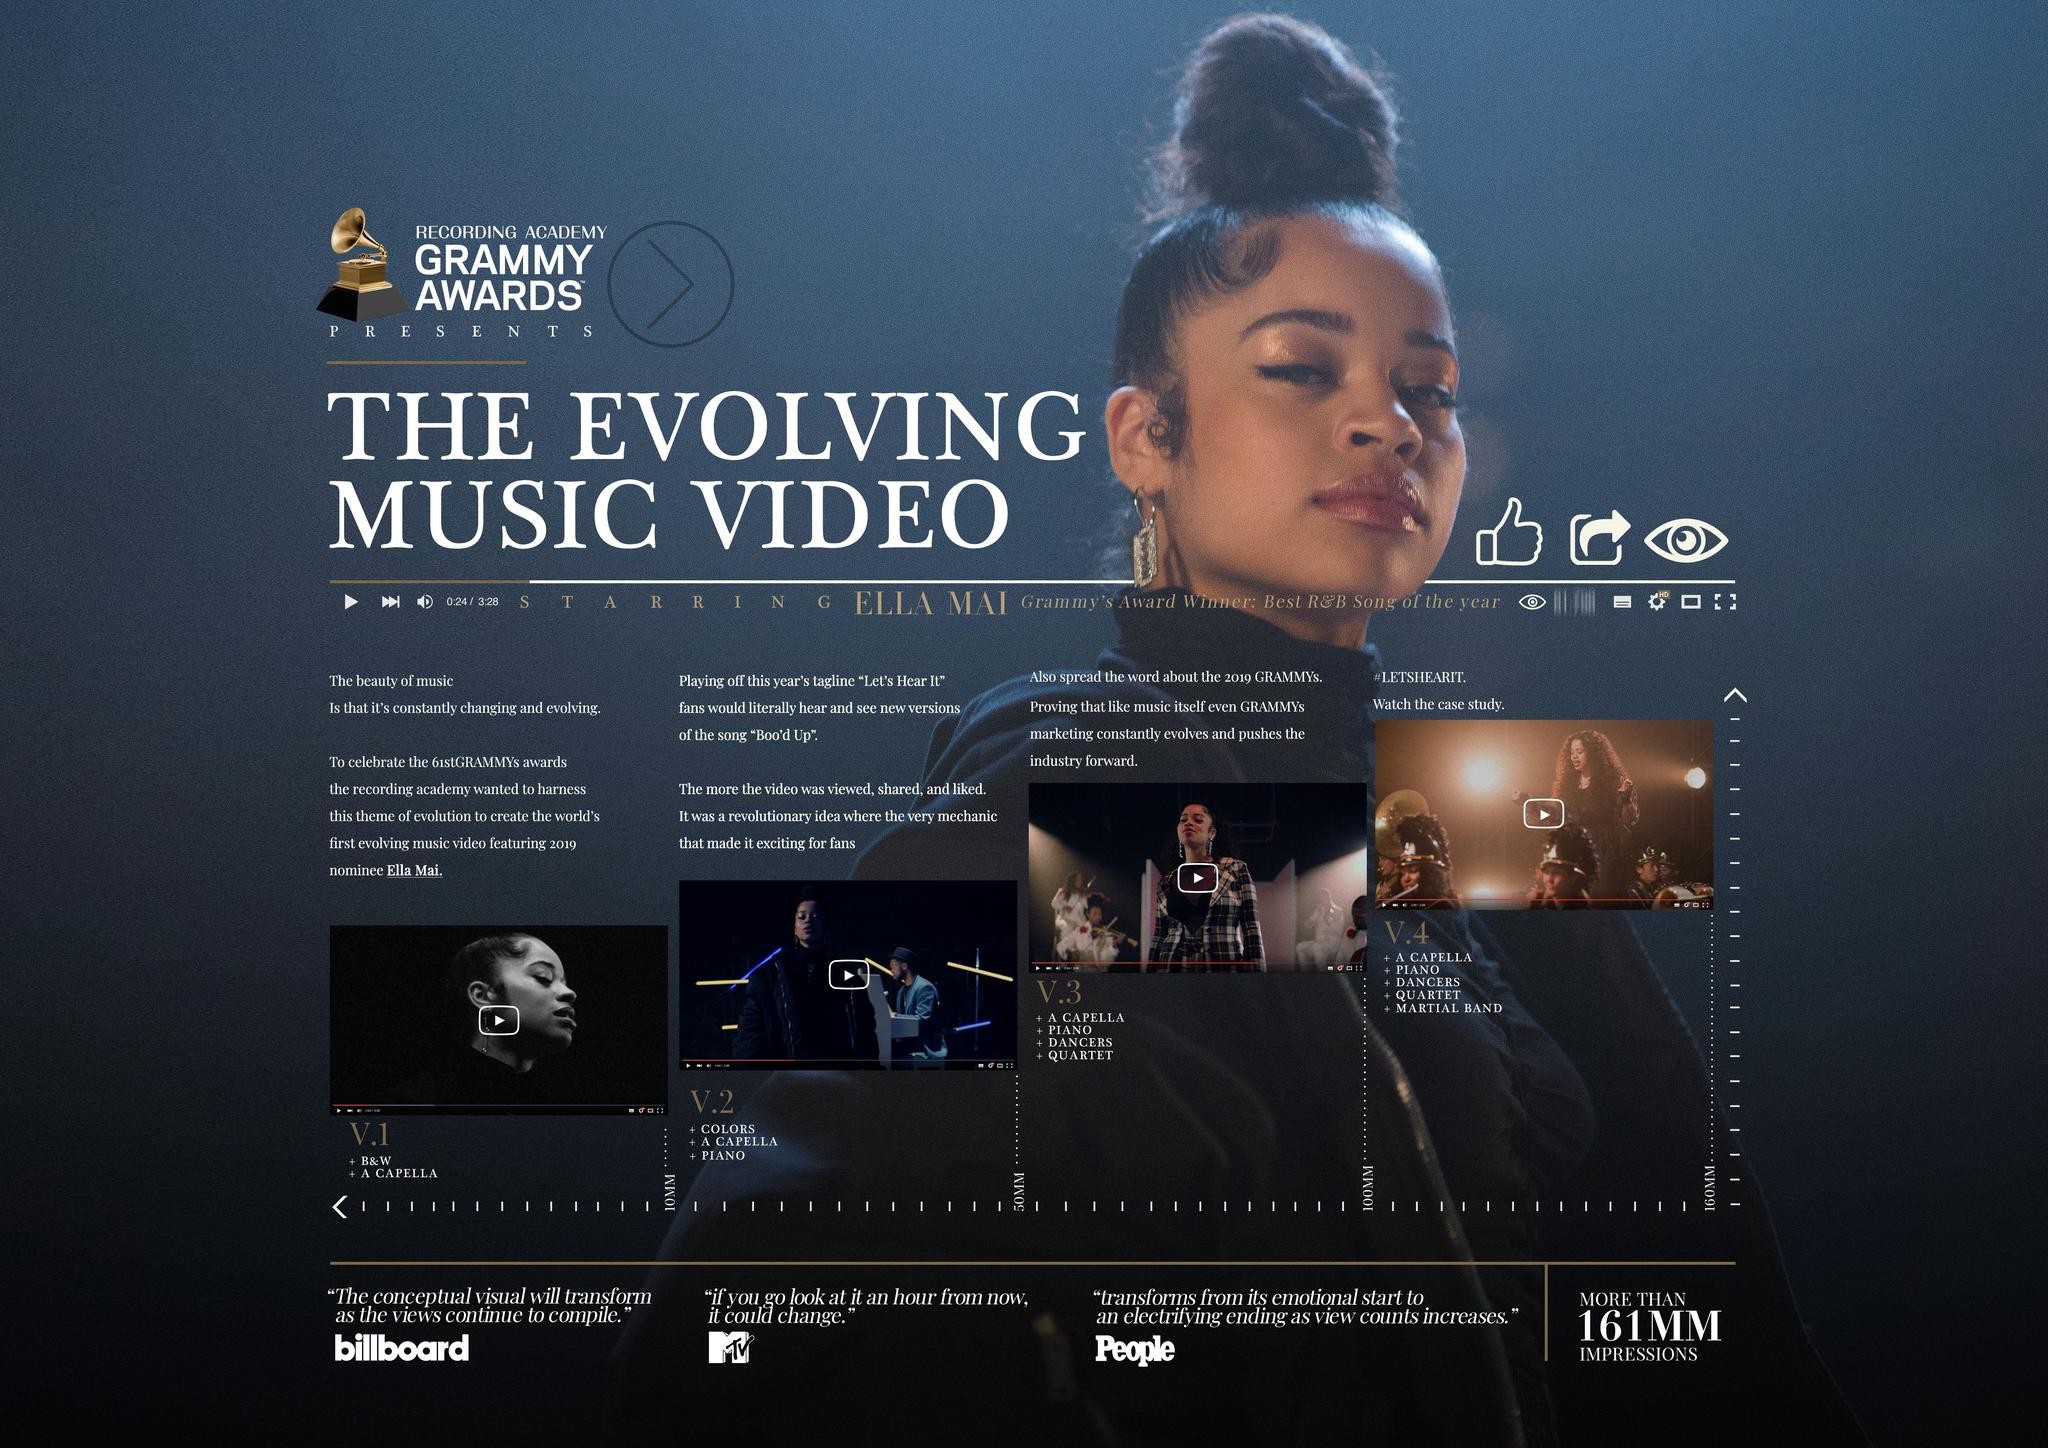 THE EVOLVING MUSIC VIDEO STARRING ELLA MAI